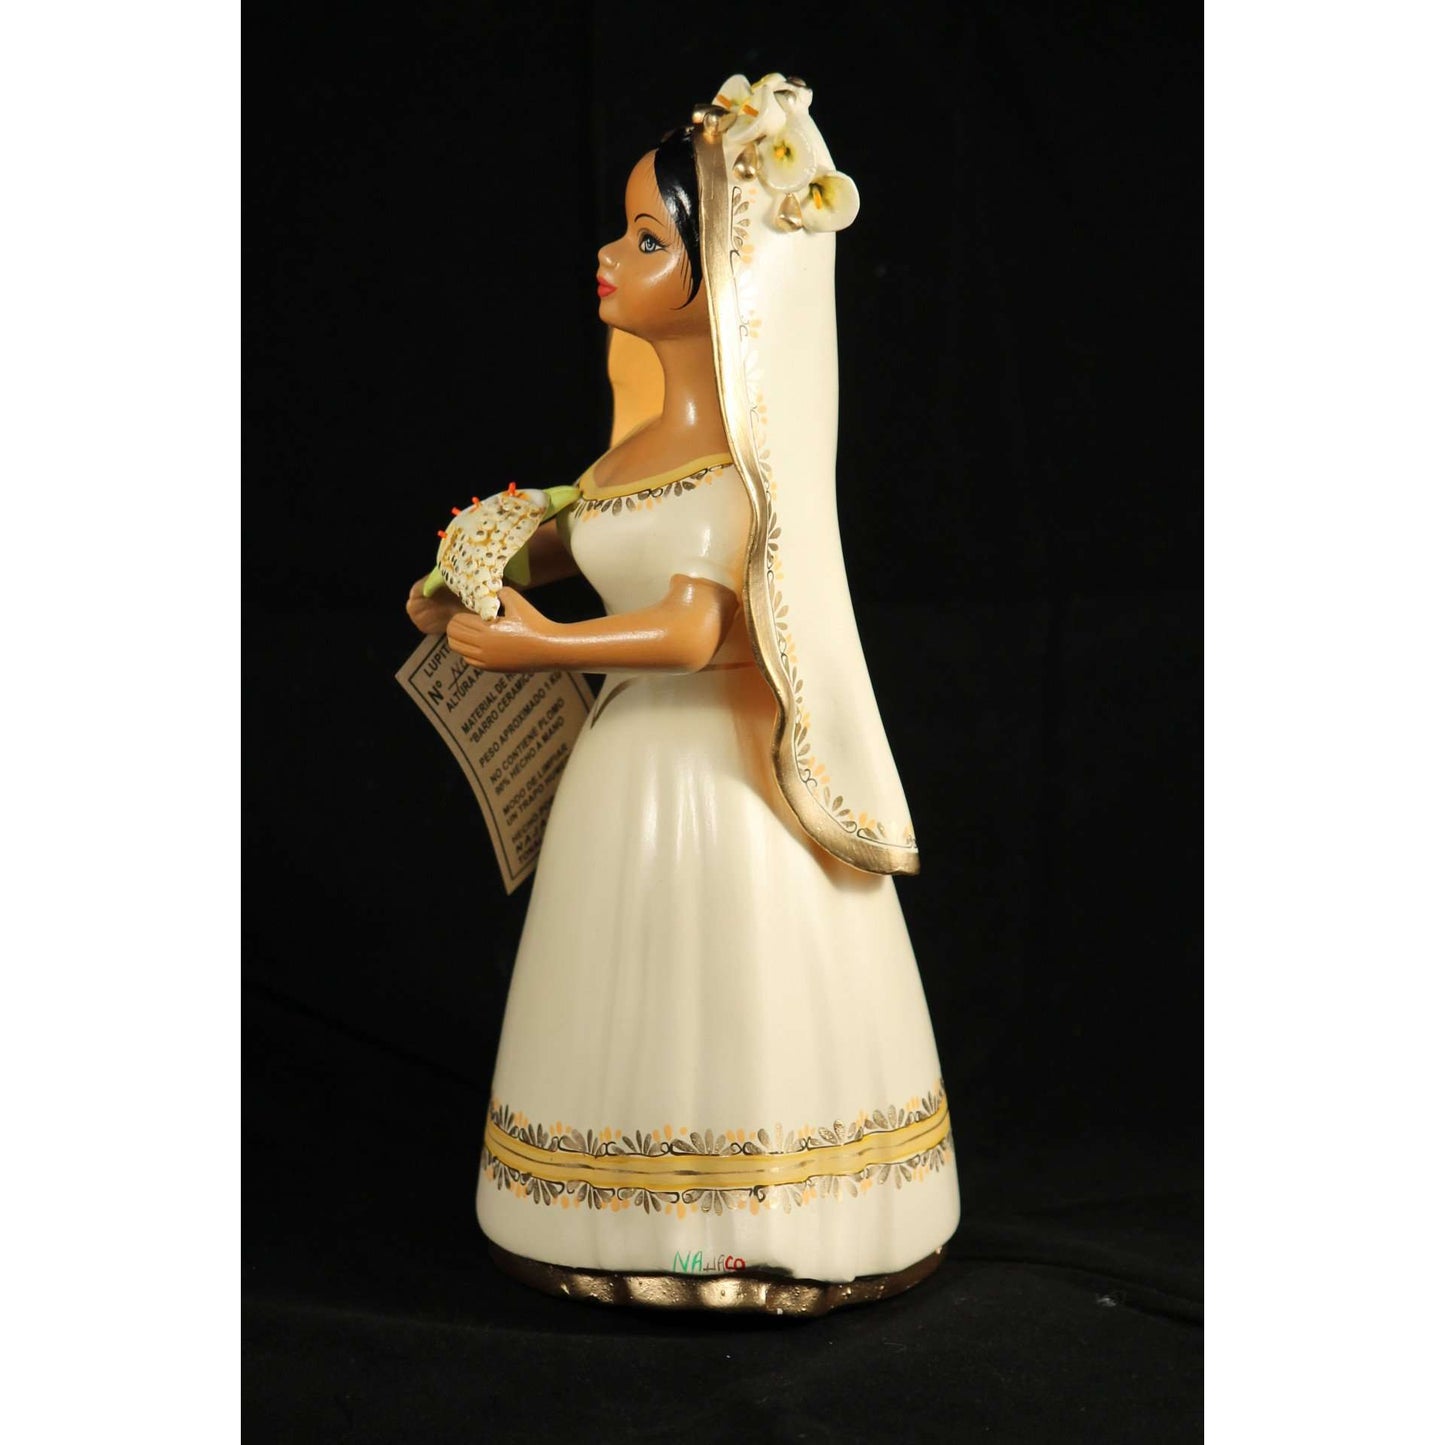 Lupita Najaco Bride Novia Ceramic Doll Figurine Tonala Mexico Folk Art Collectible